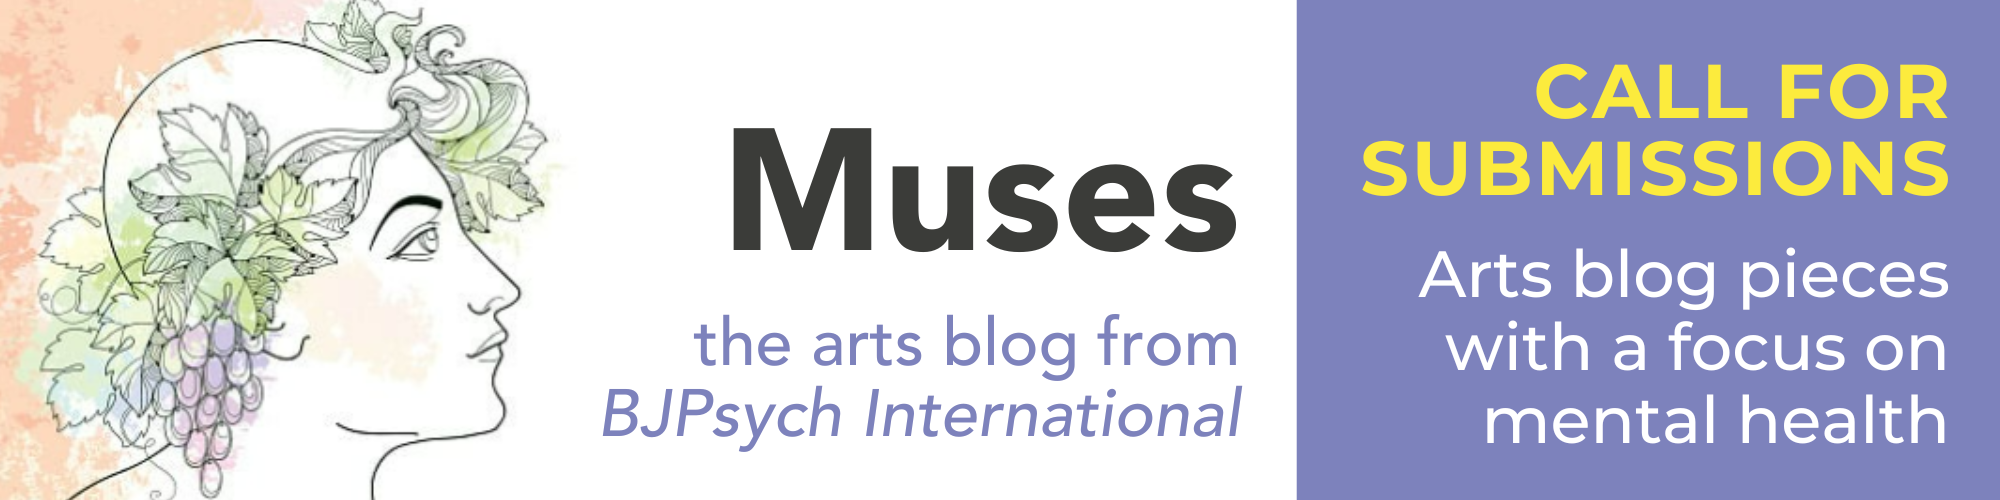 BJPsych International Muses the arts blog